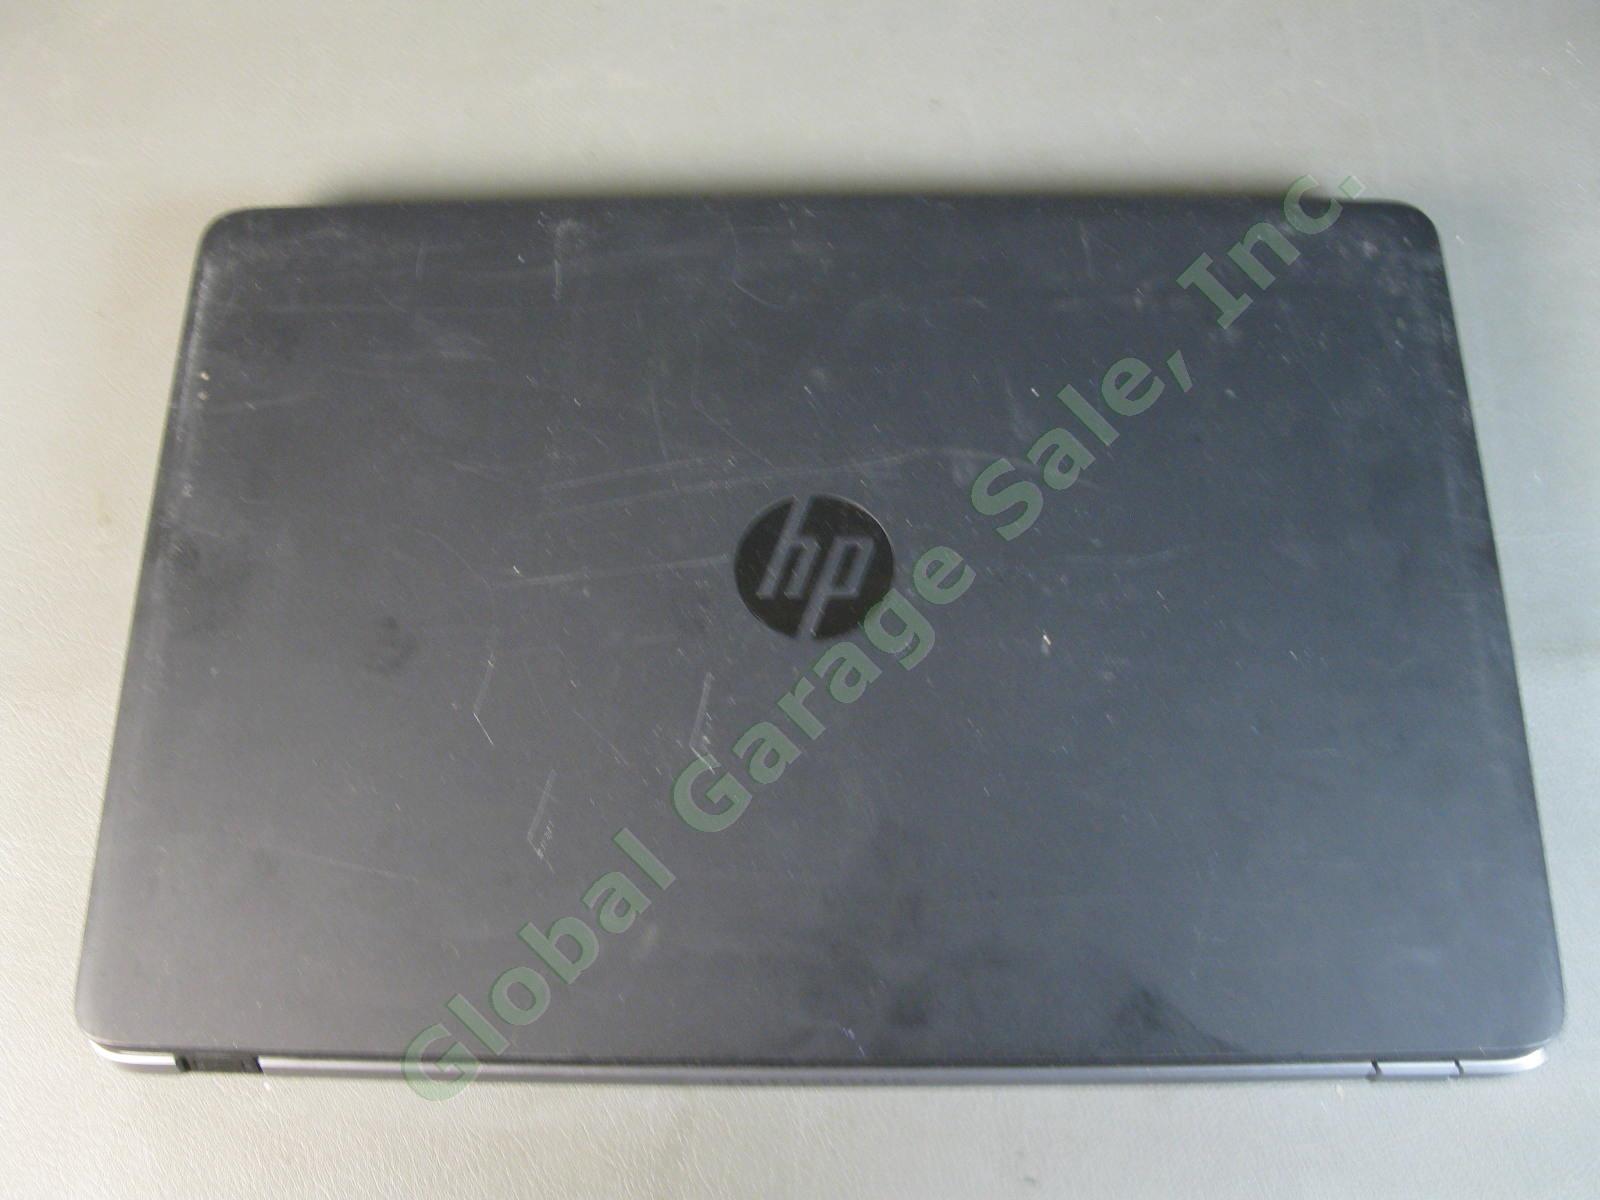 HP ProBook 450 G1 Laptop Computer i5-4200M 4GB 500GB Windows 10 WIFI Webcam READ 7